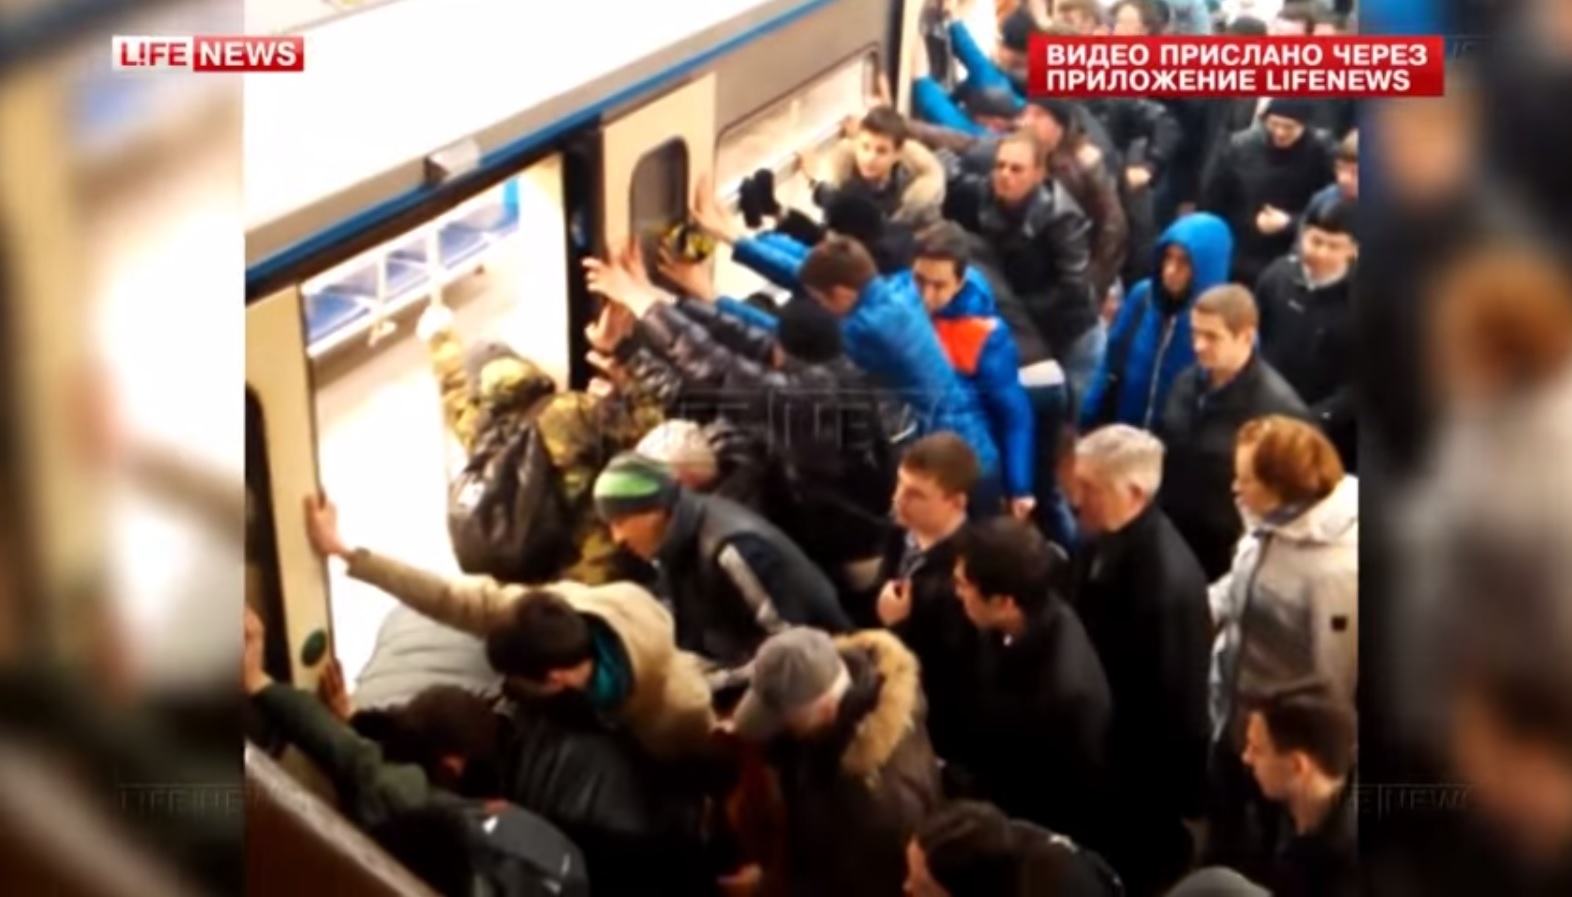 Passageiros unem-se para salvar idosa presa no metro [vídeo]